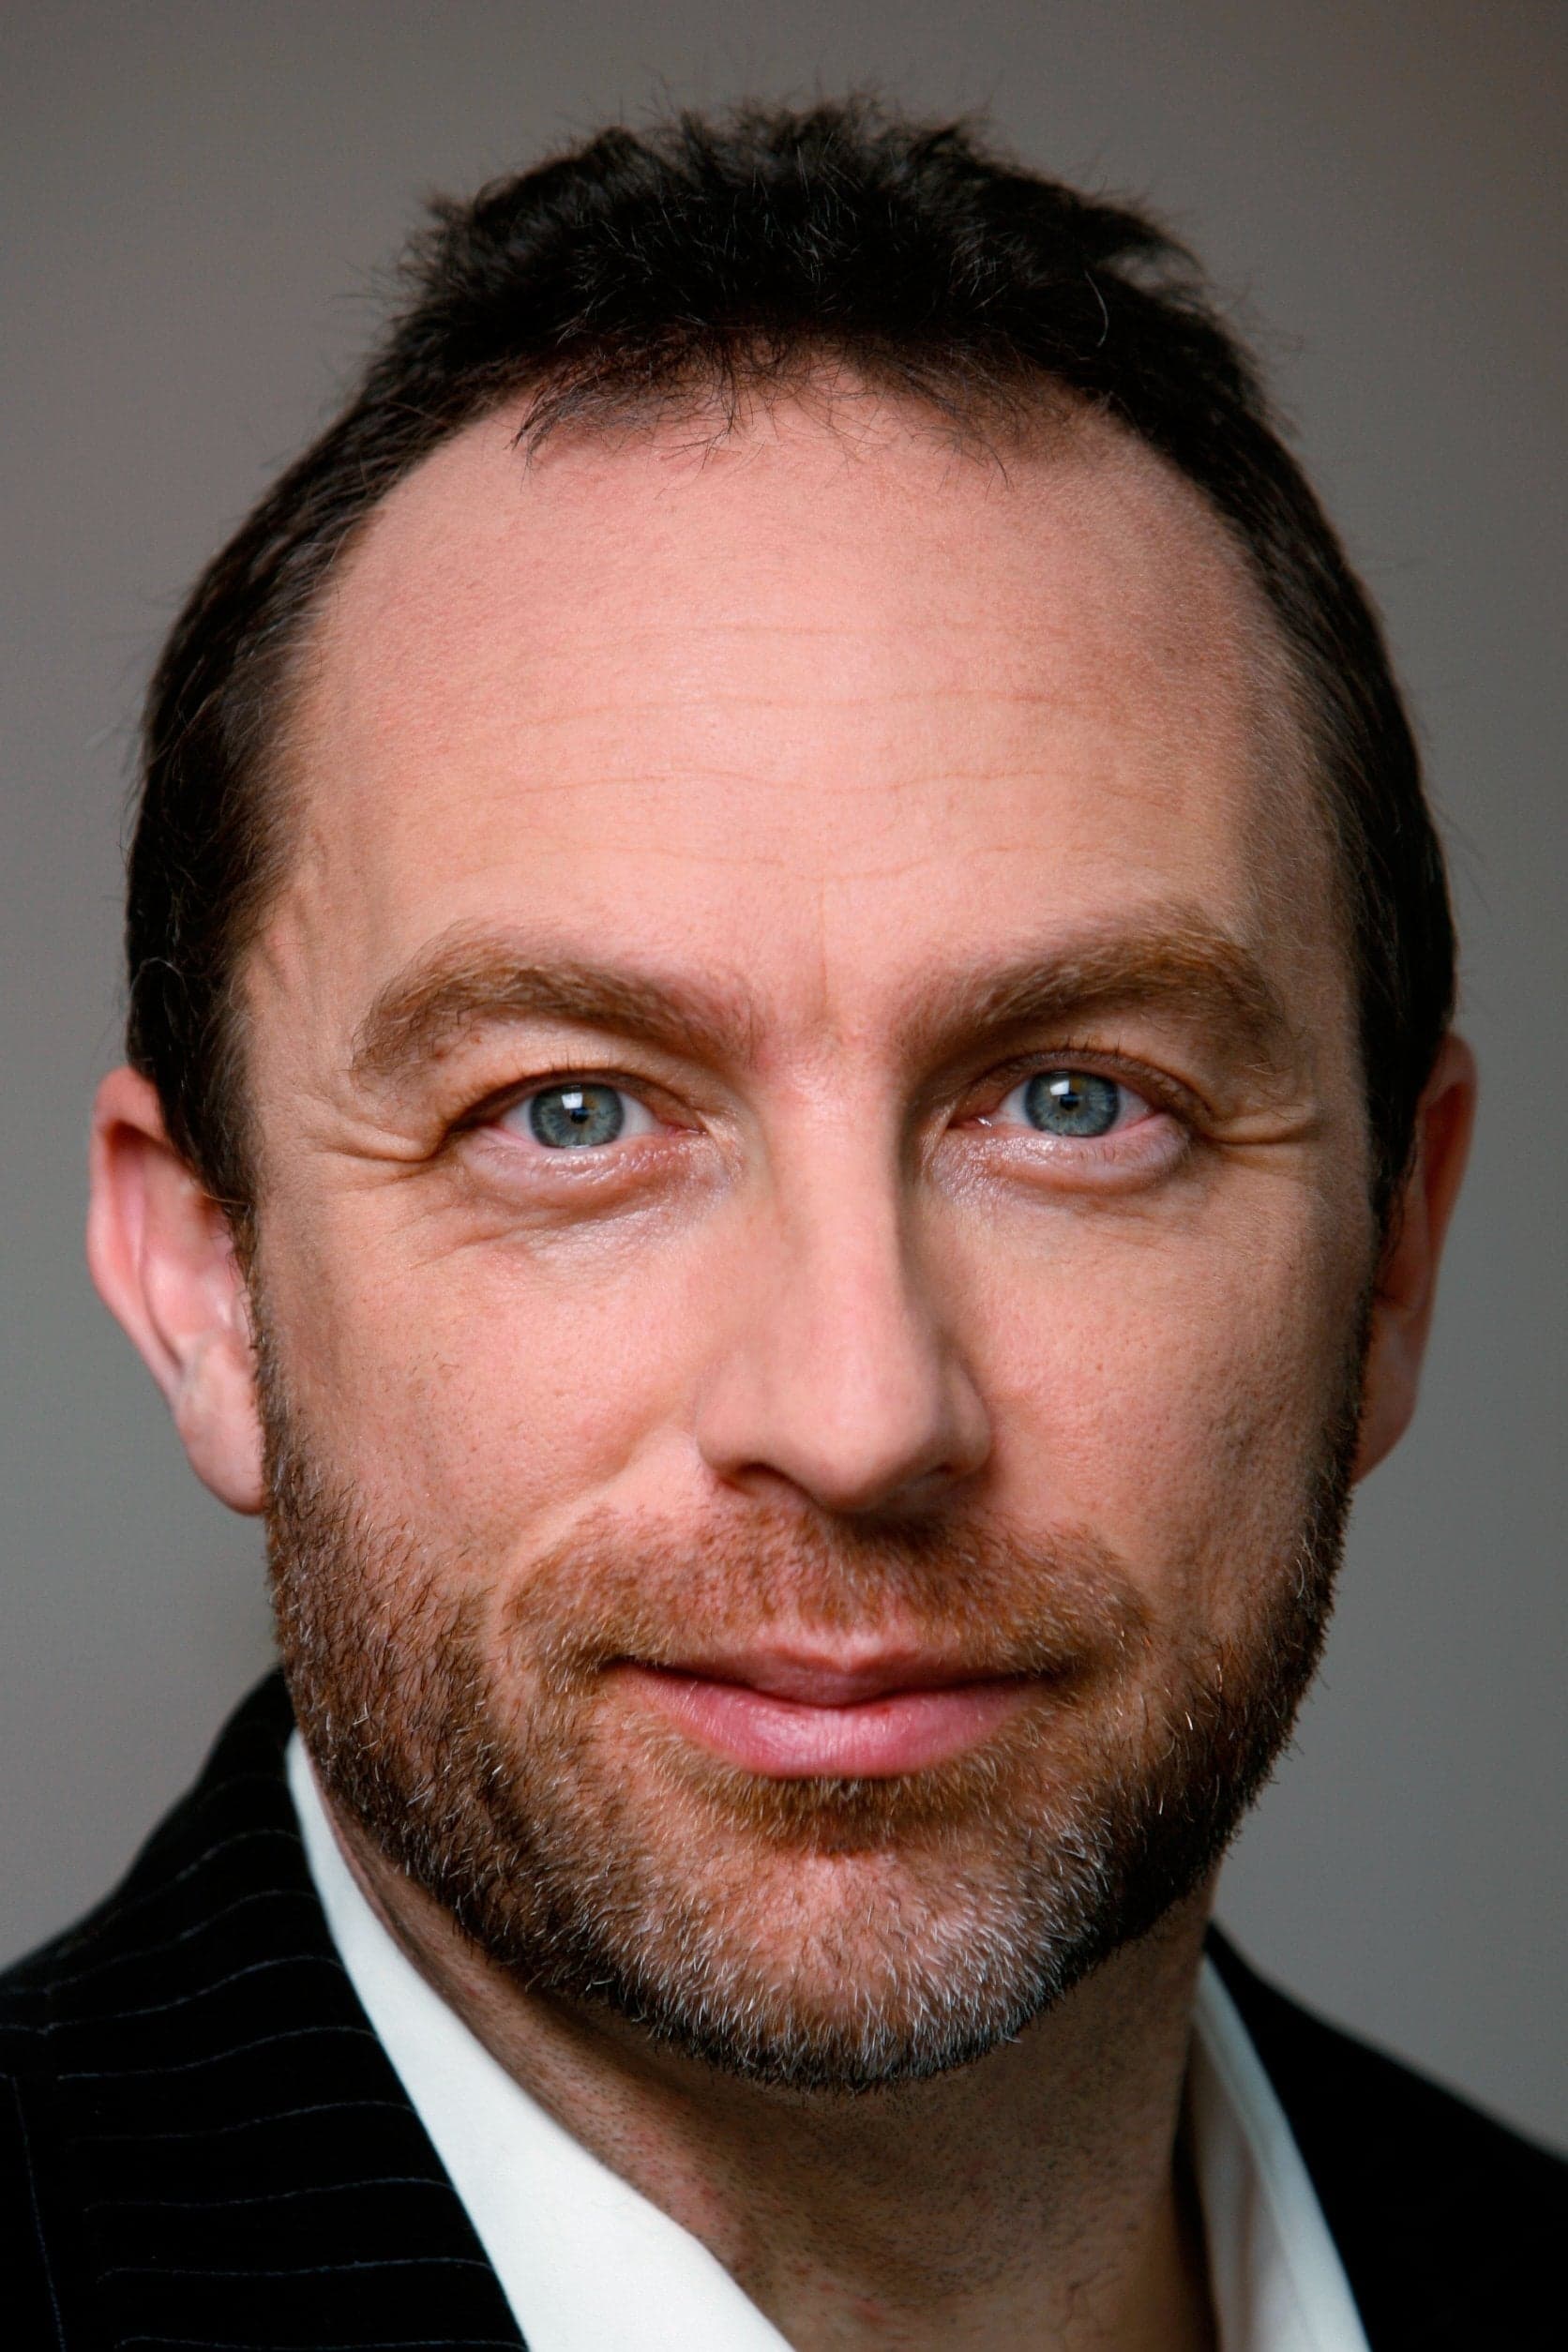 Jimmy Wales | Himself - Co-Founder, Wikipedia